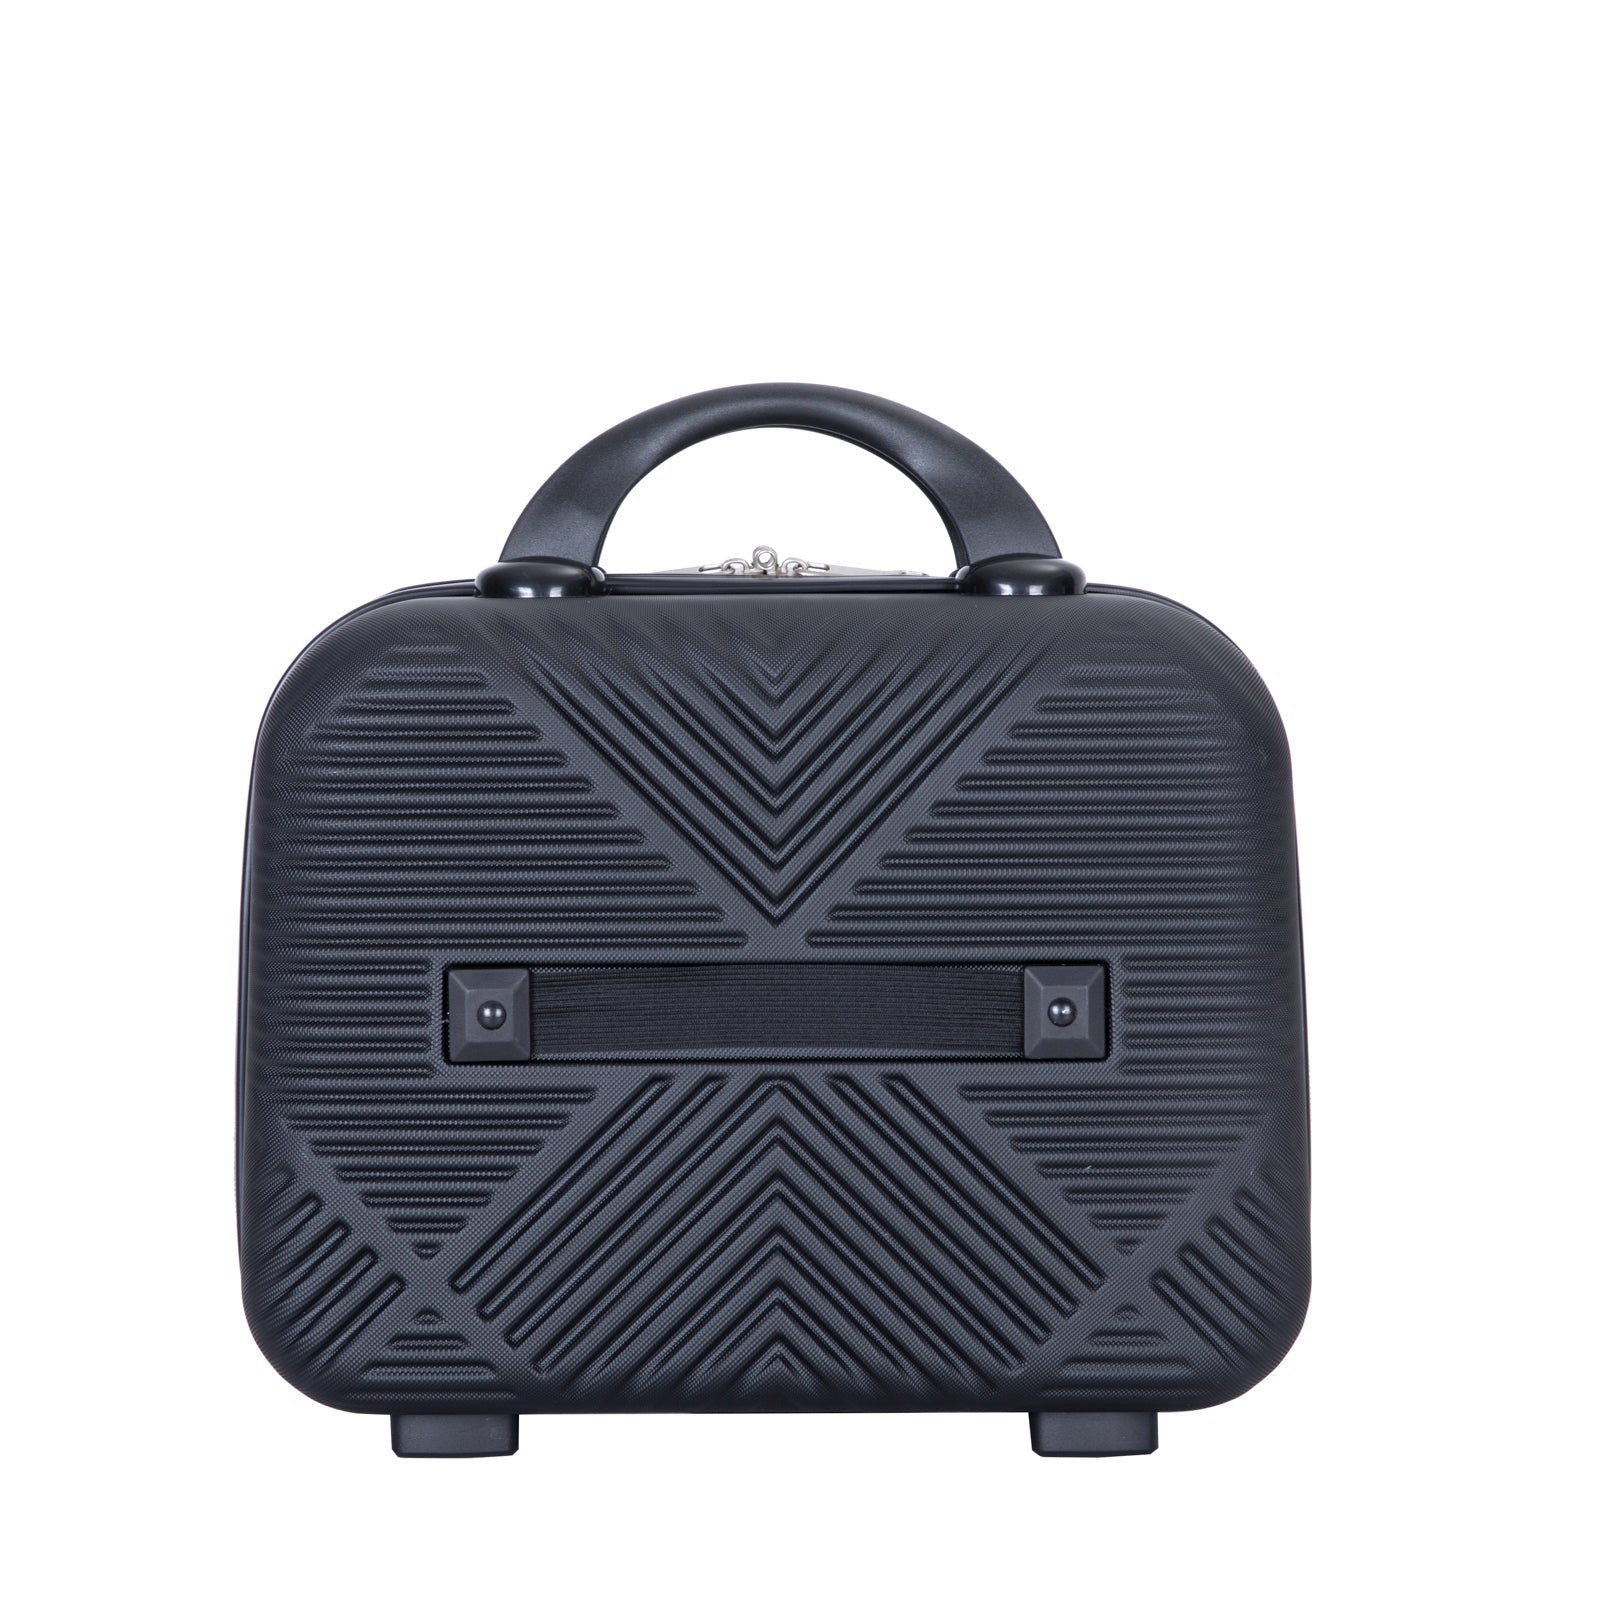 4 piece ABS lightweight suitcase, 14 inch makeup box black-abs